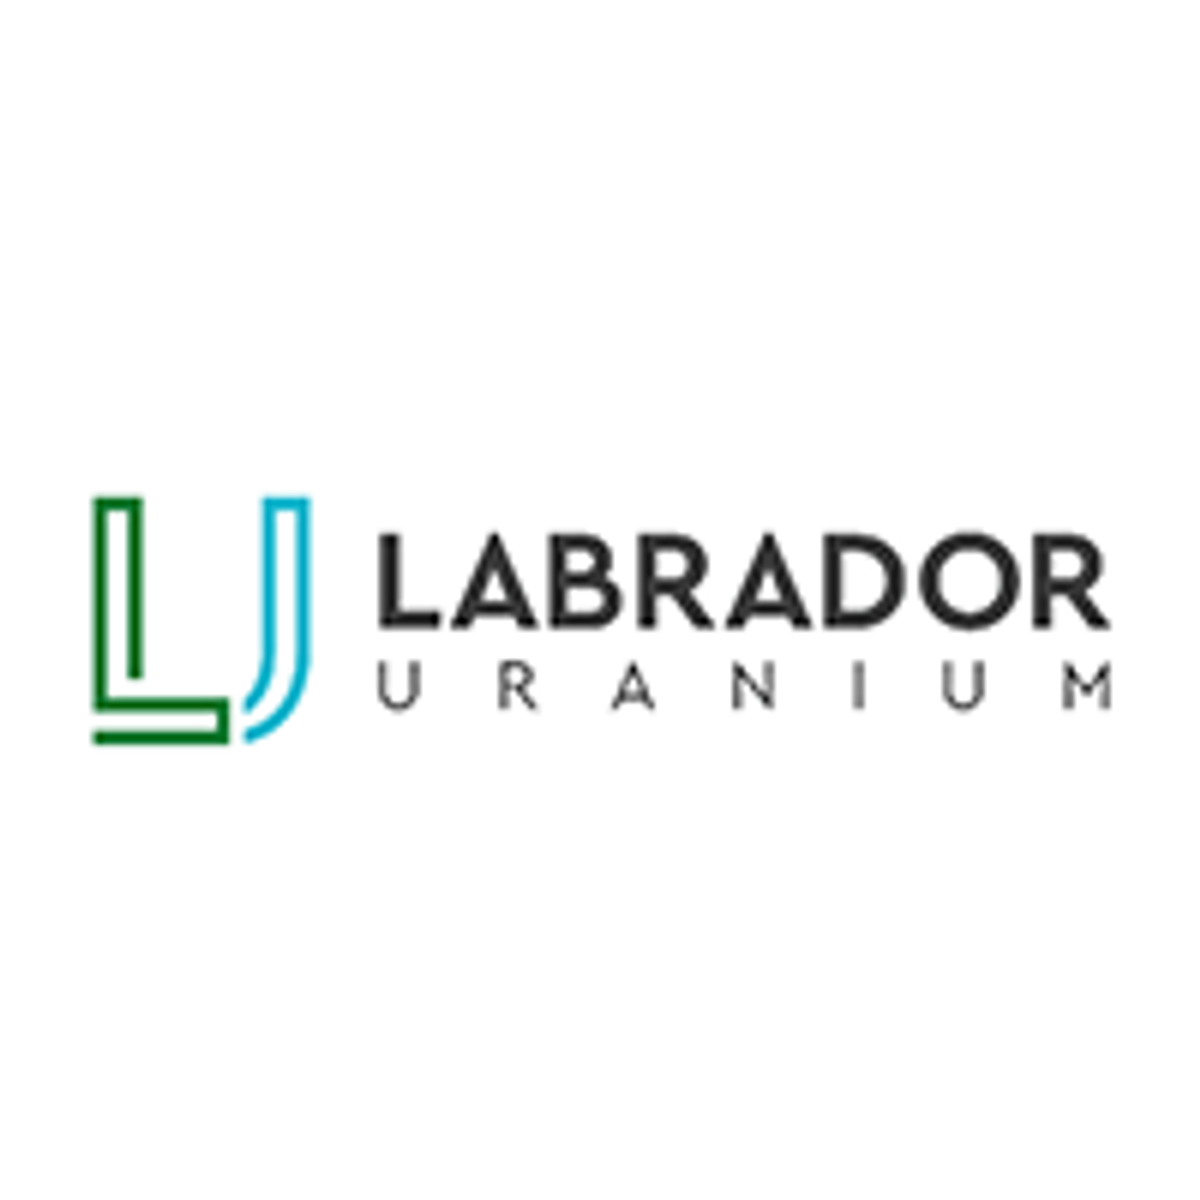 Labrador Uranium Commences Drilling at Moran Lake and Announces Corporate Update